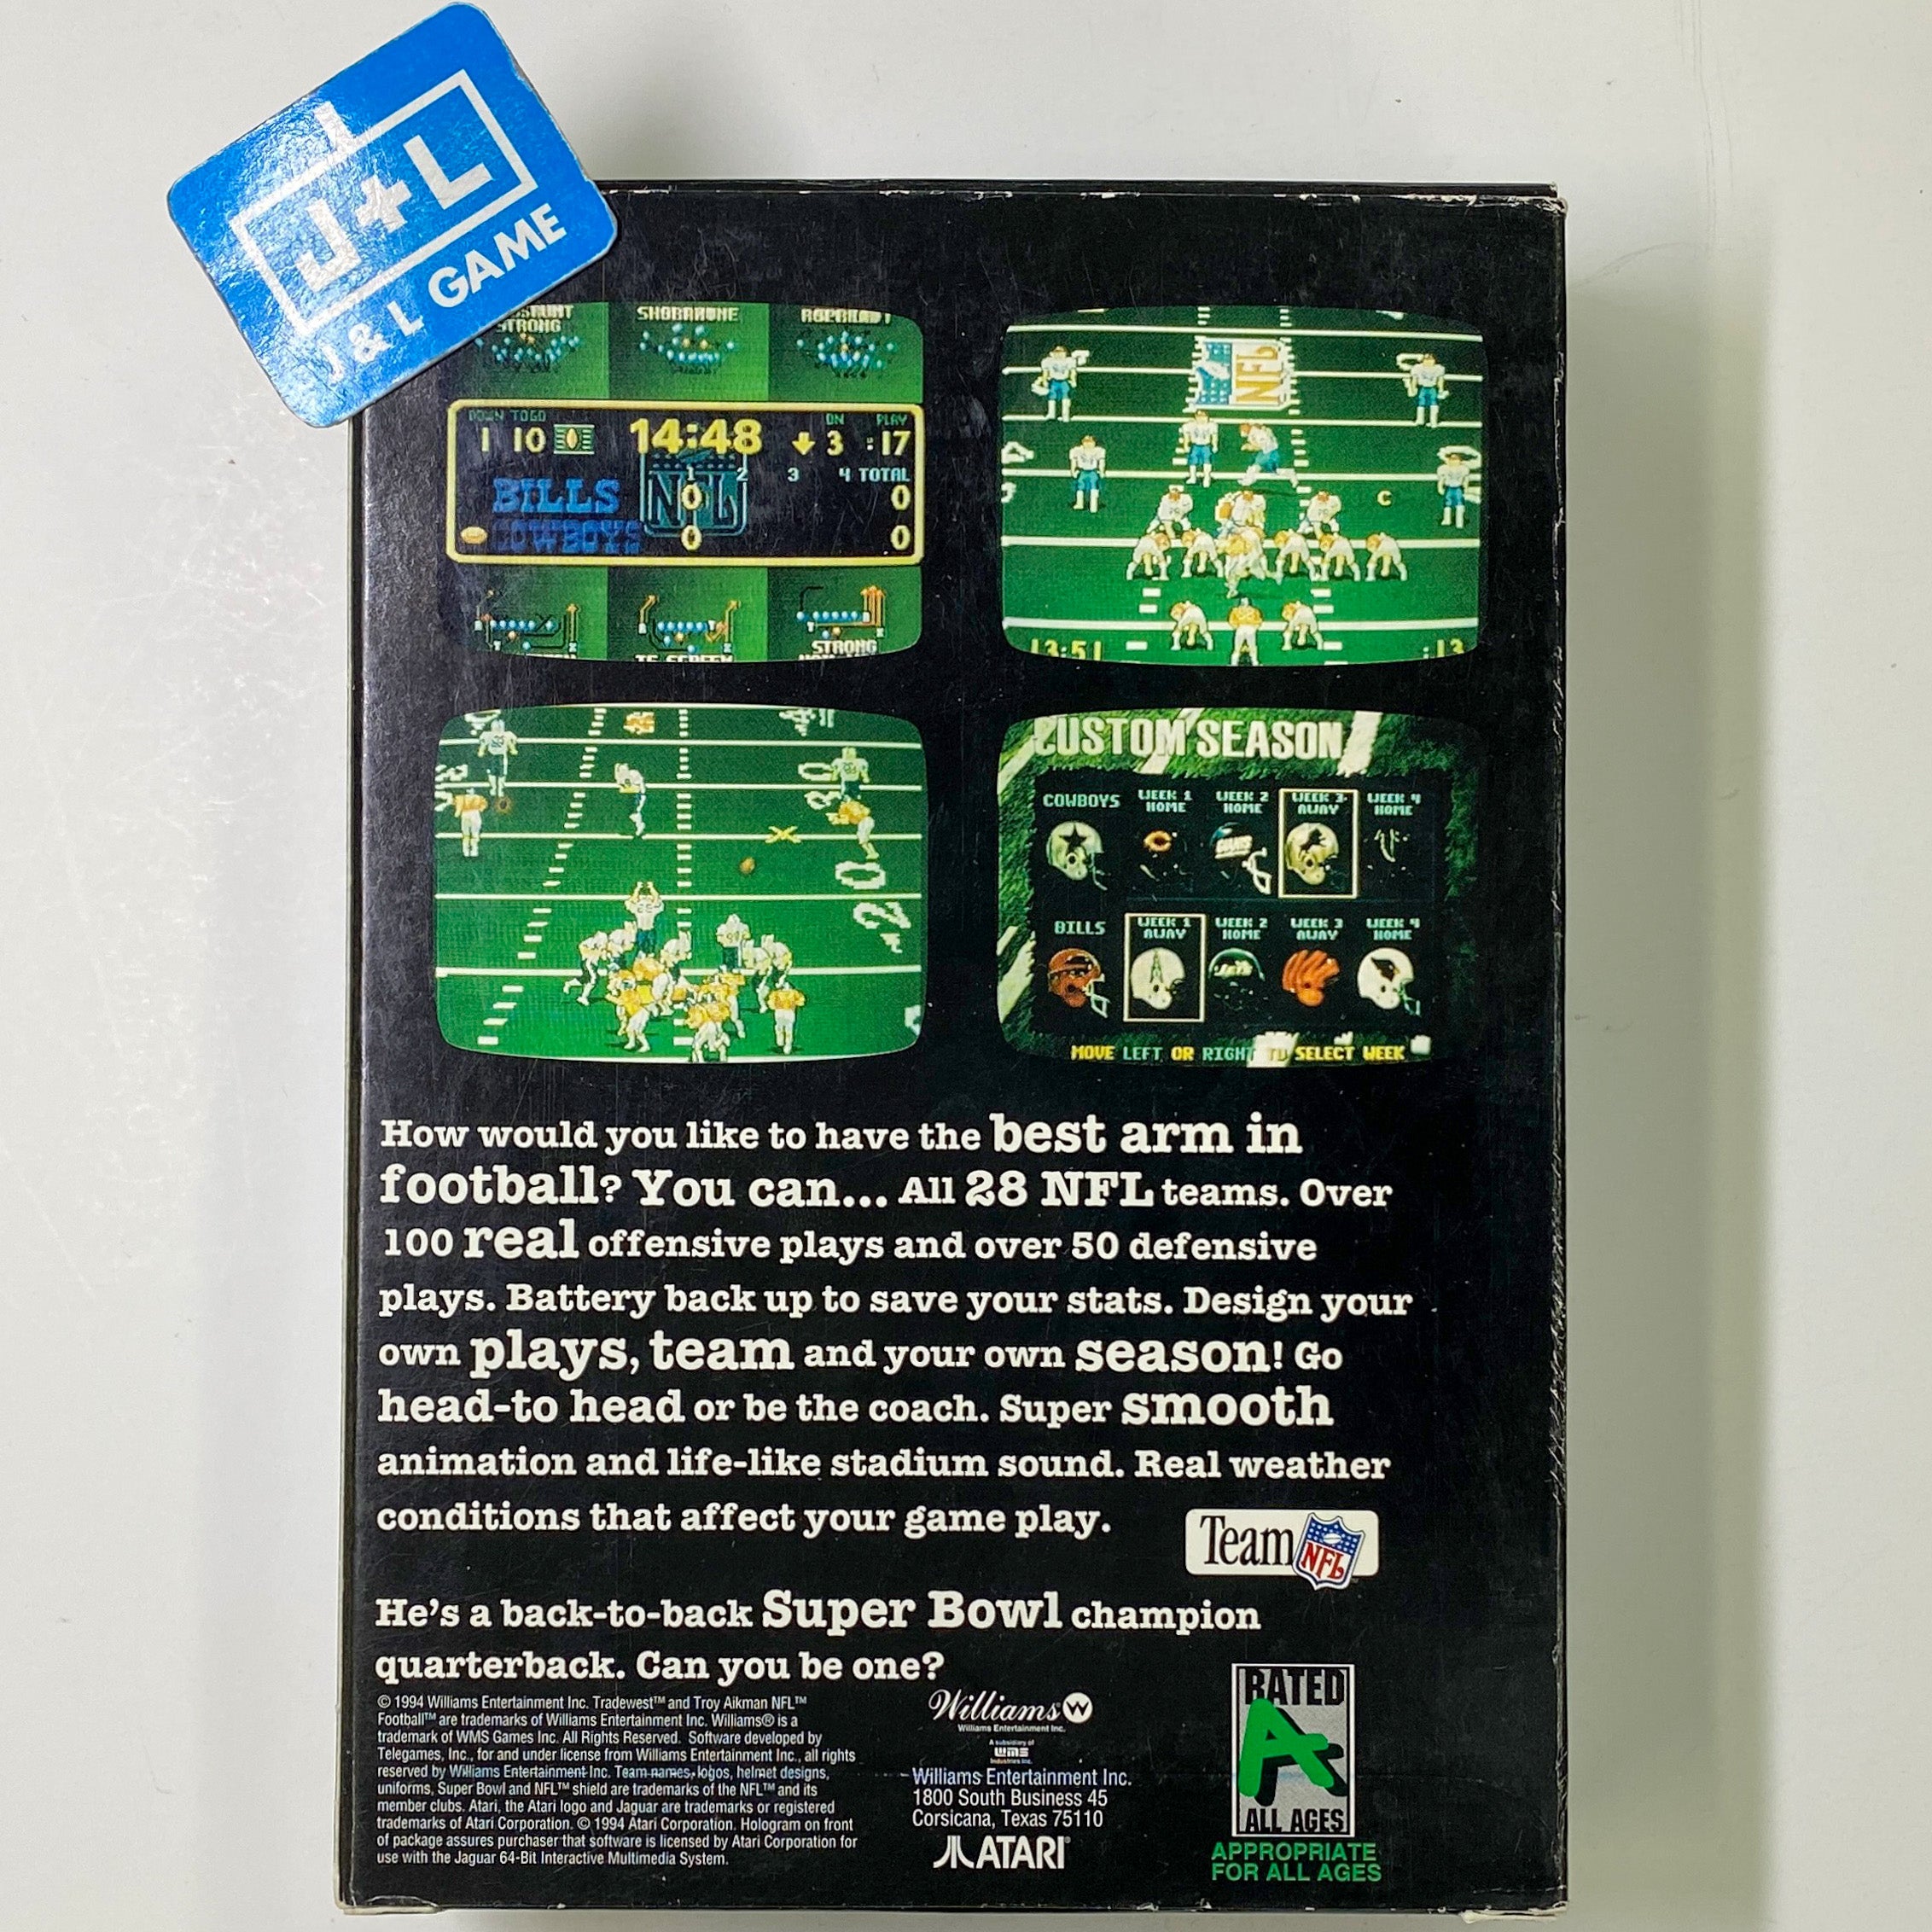 Troy Aikman NFL Football - Atari Jaguar [Pre-Owned] Video Games Williams   